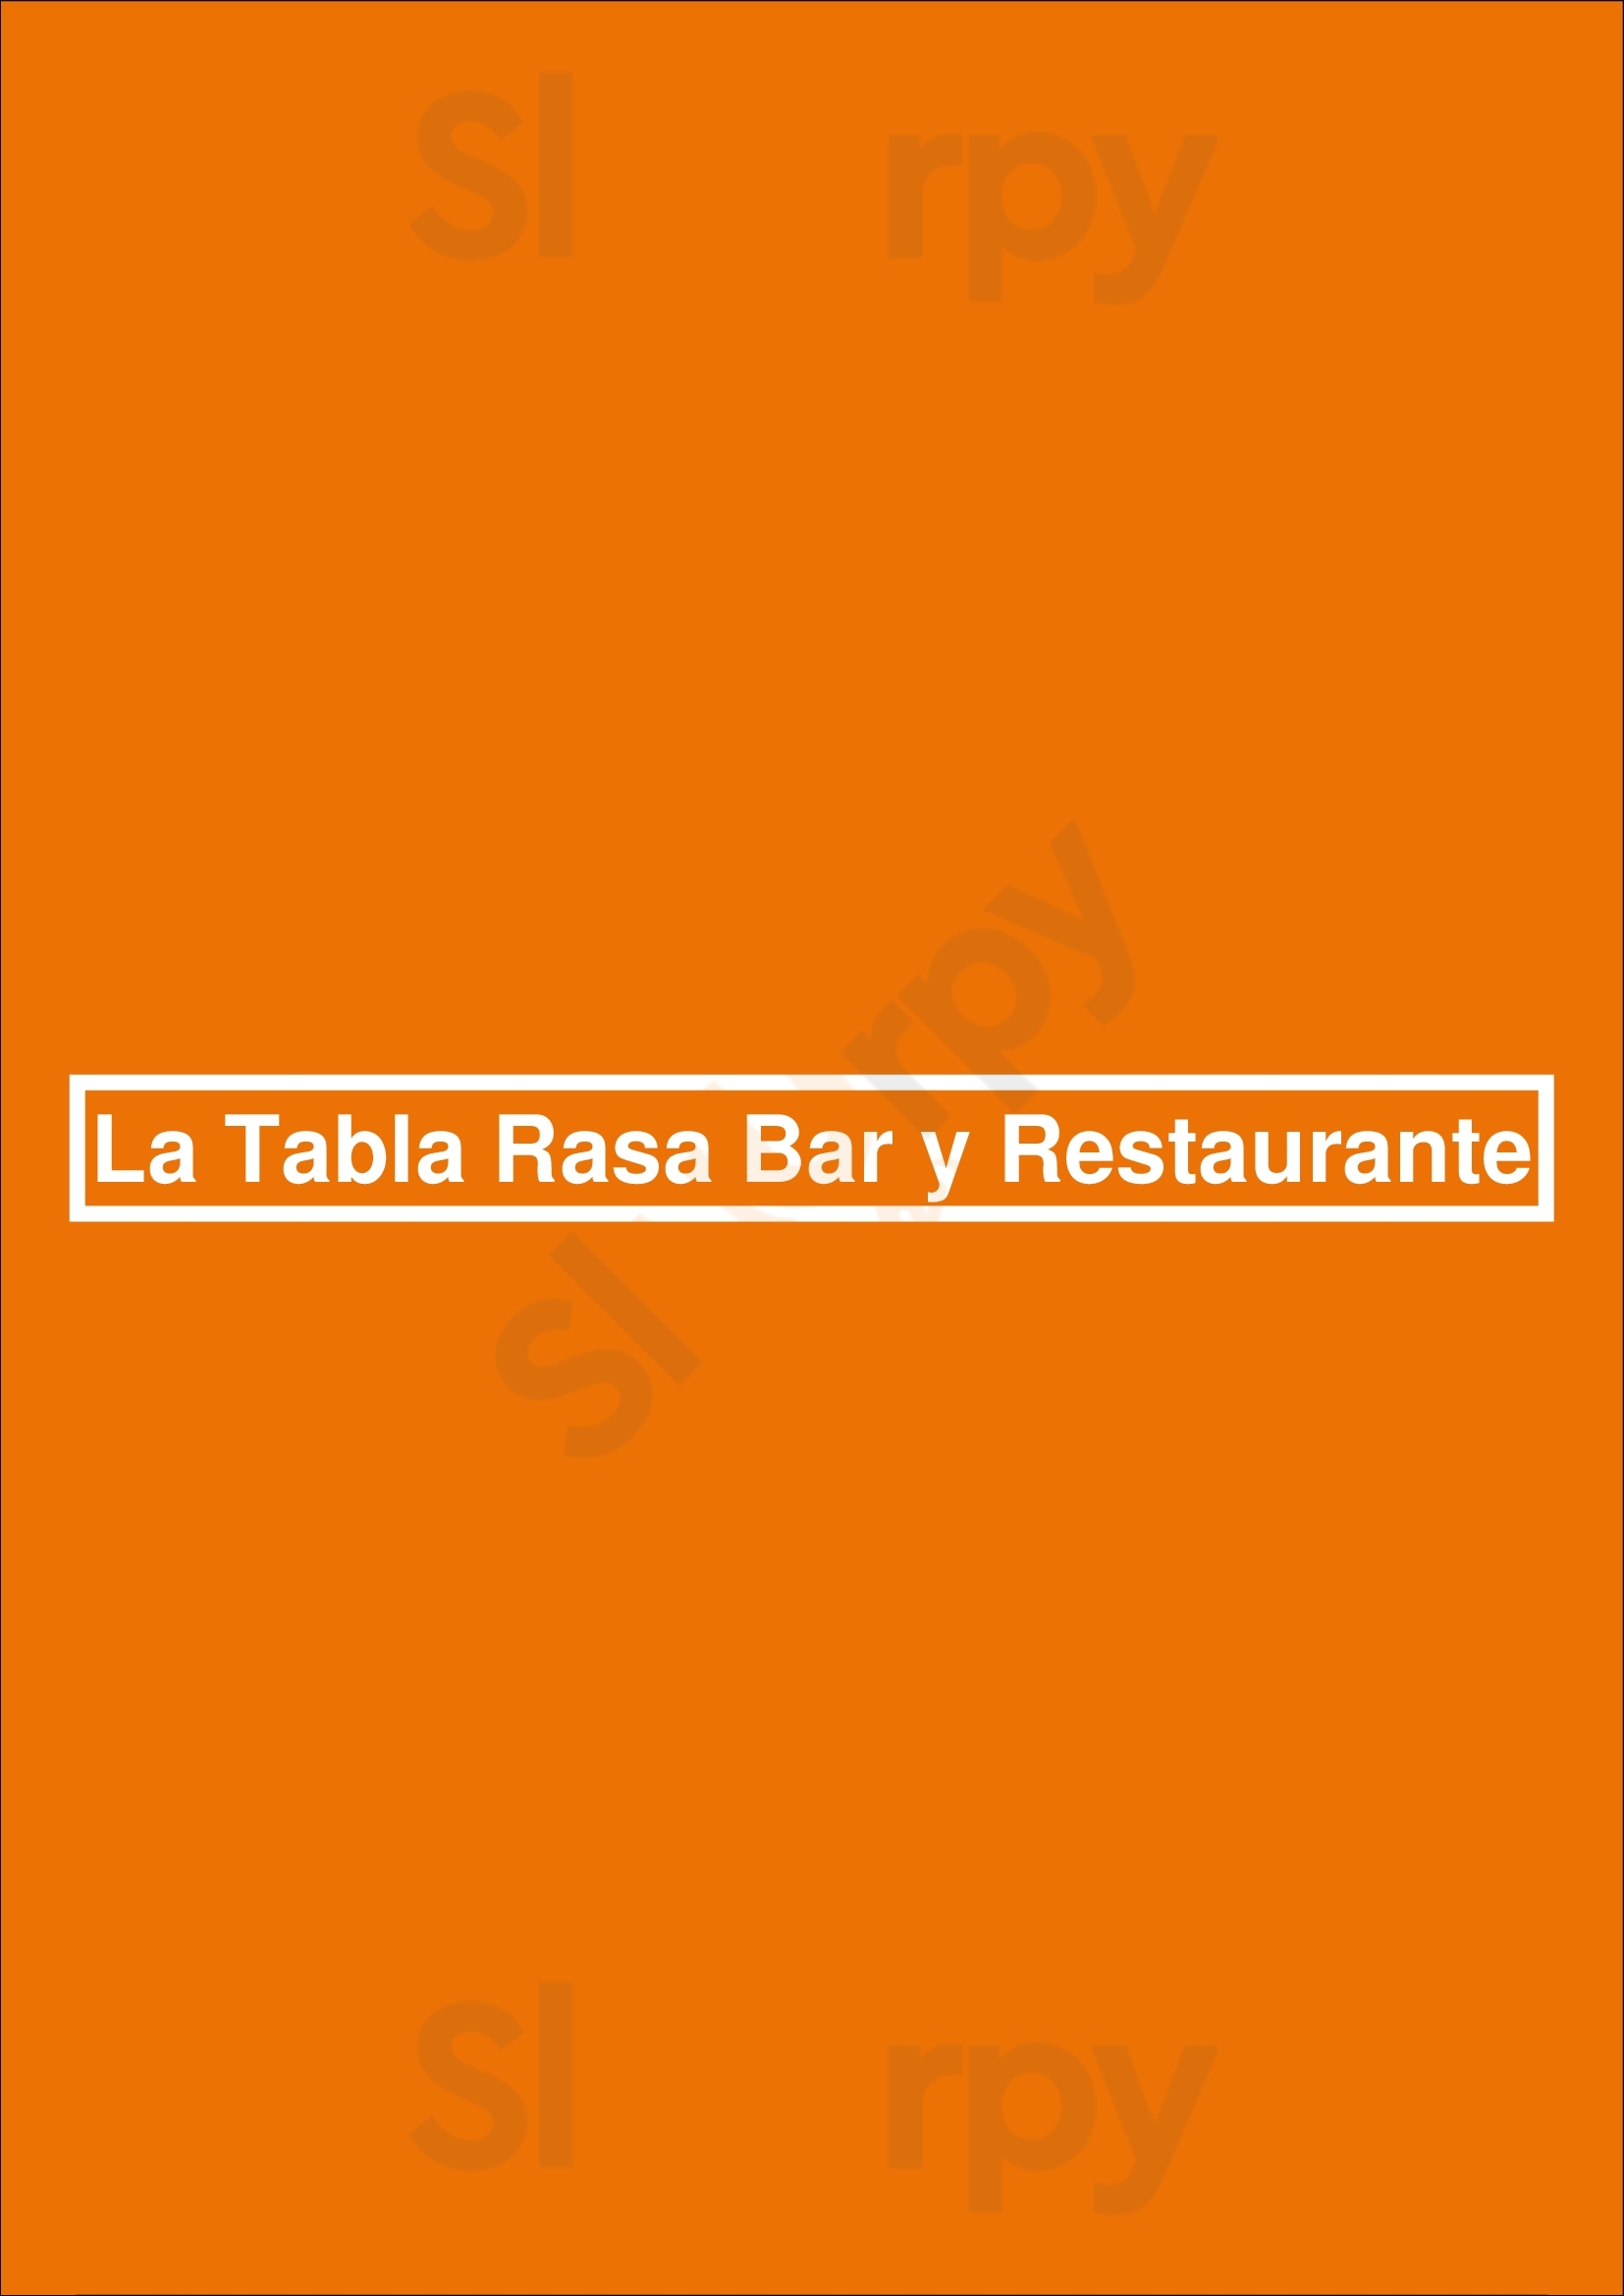 La Tabla Rasa Bar Y Restaurante Frankfurt am Main Menu - 1